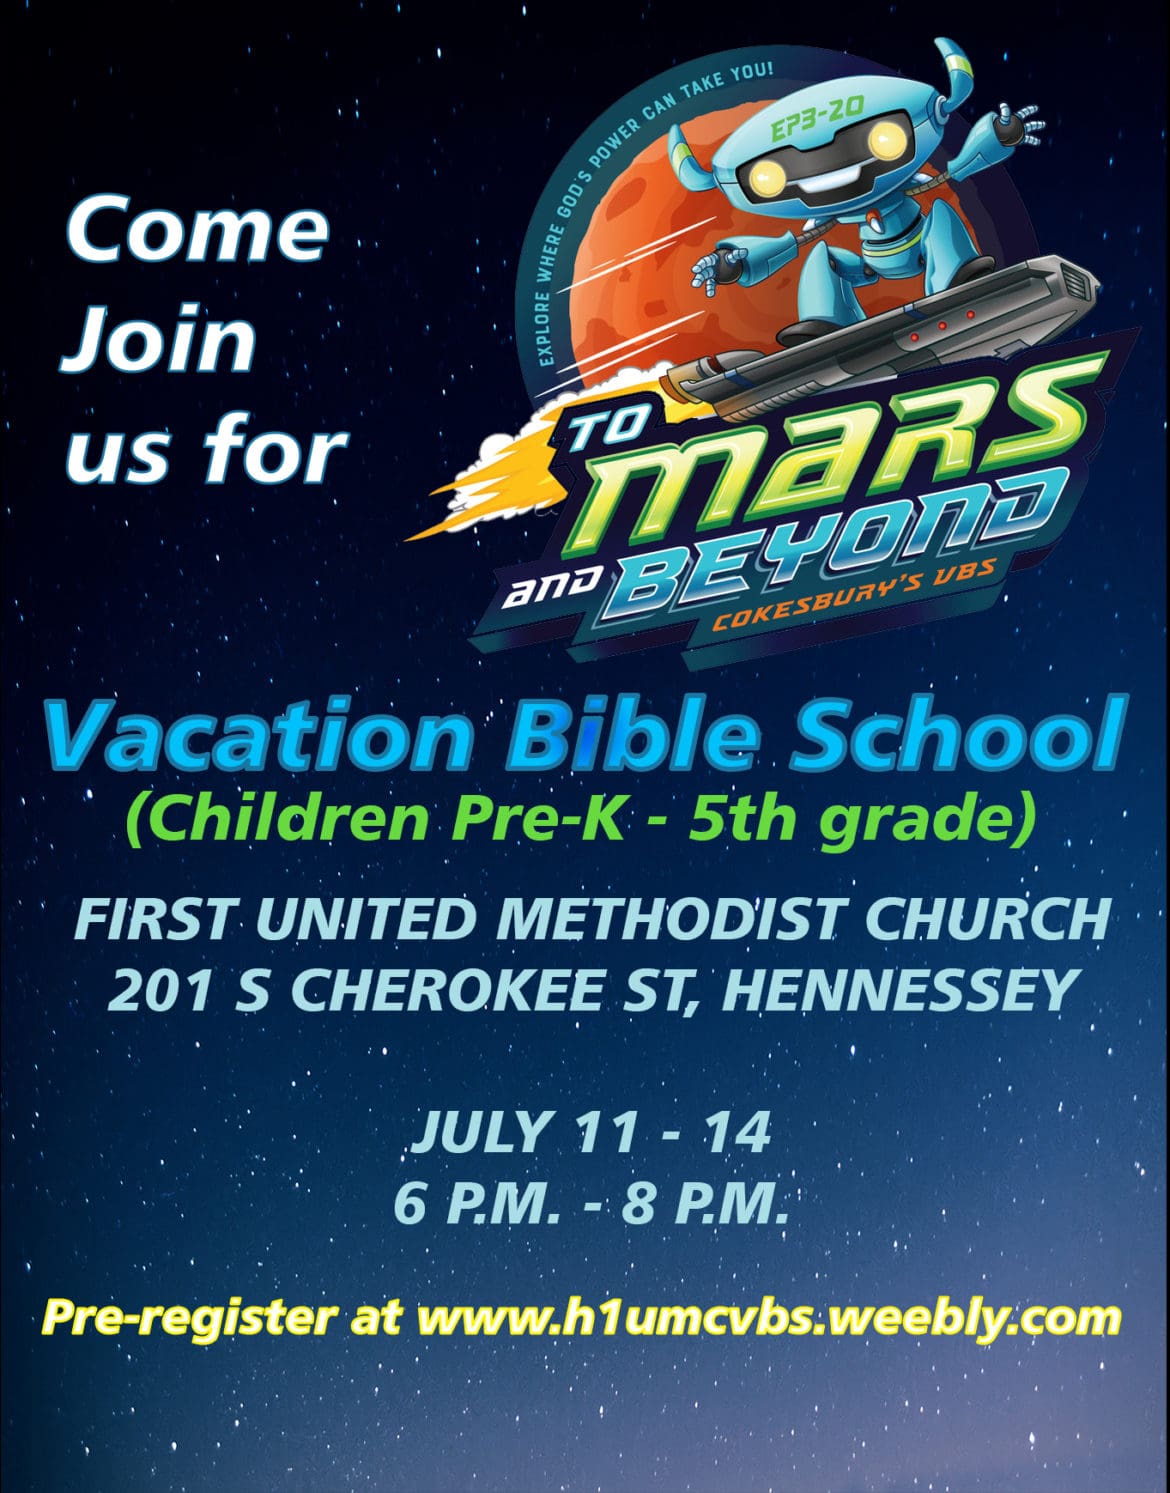 METHODIST CHURCH VBS JULY 11 -14